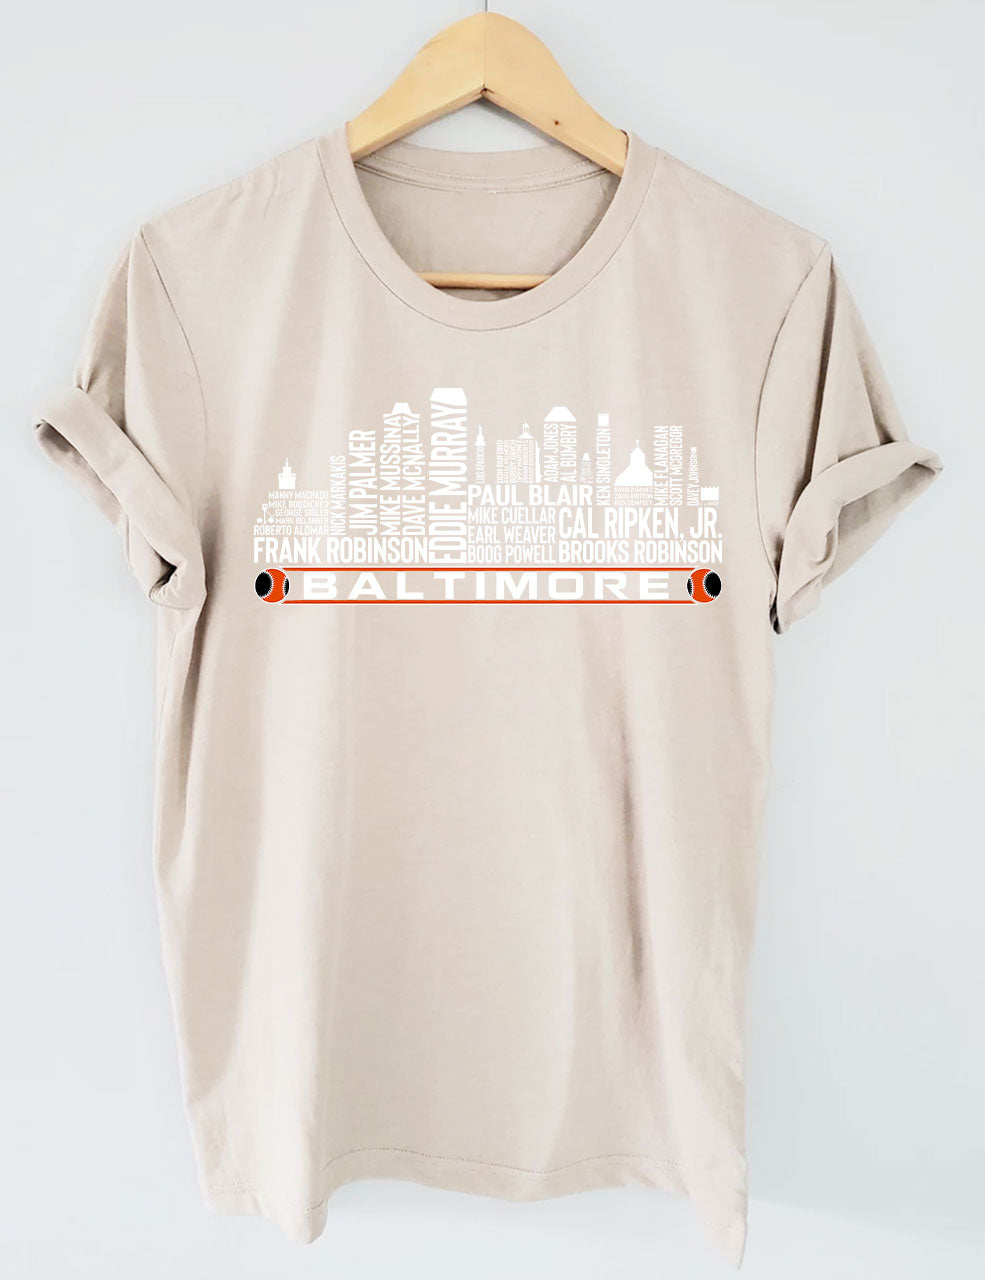 Baltimore Baseball T-shirt